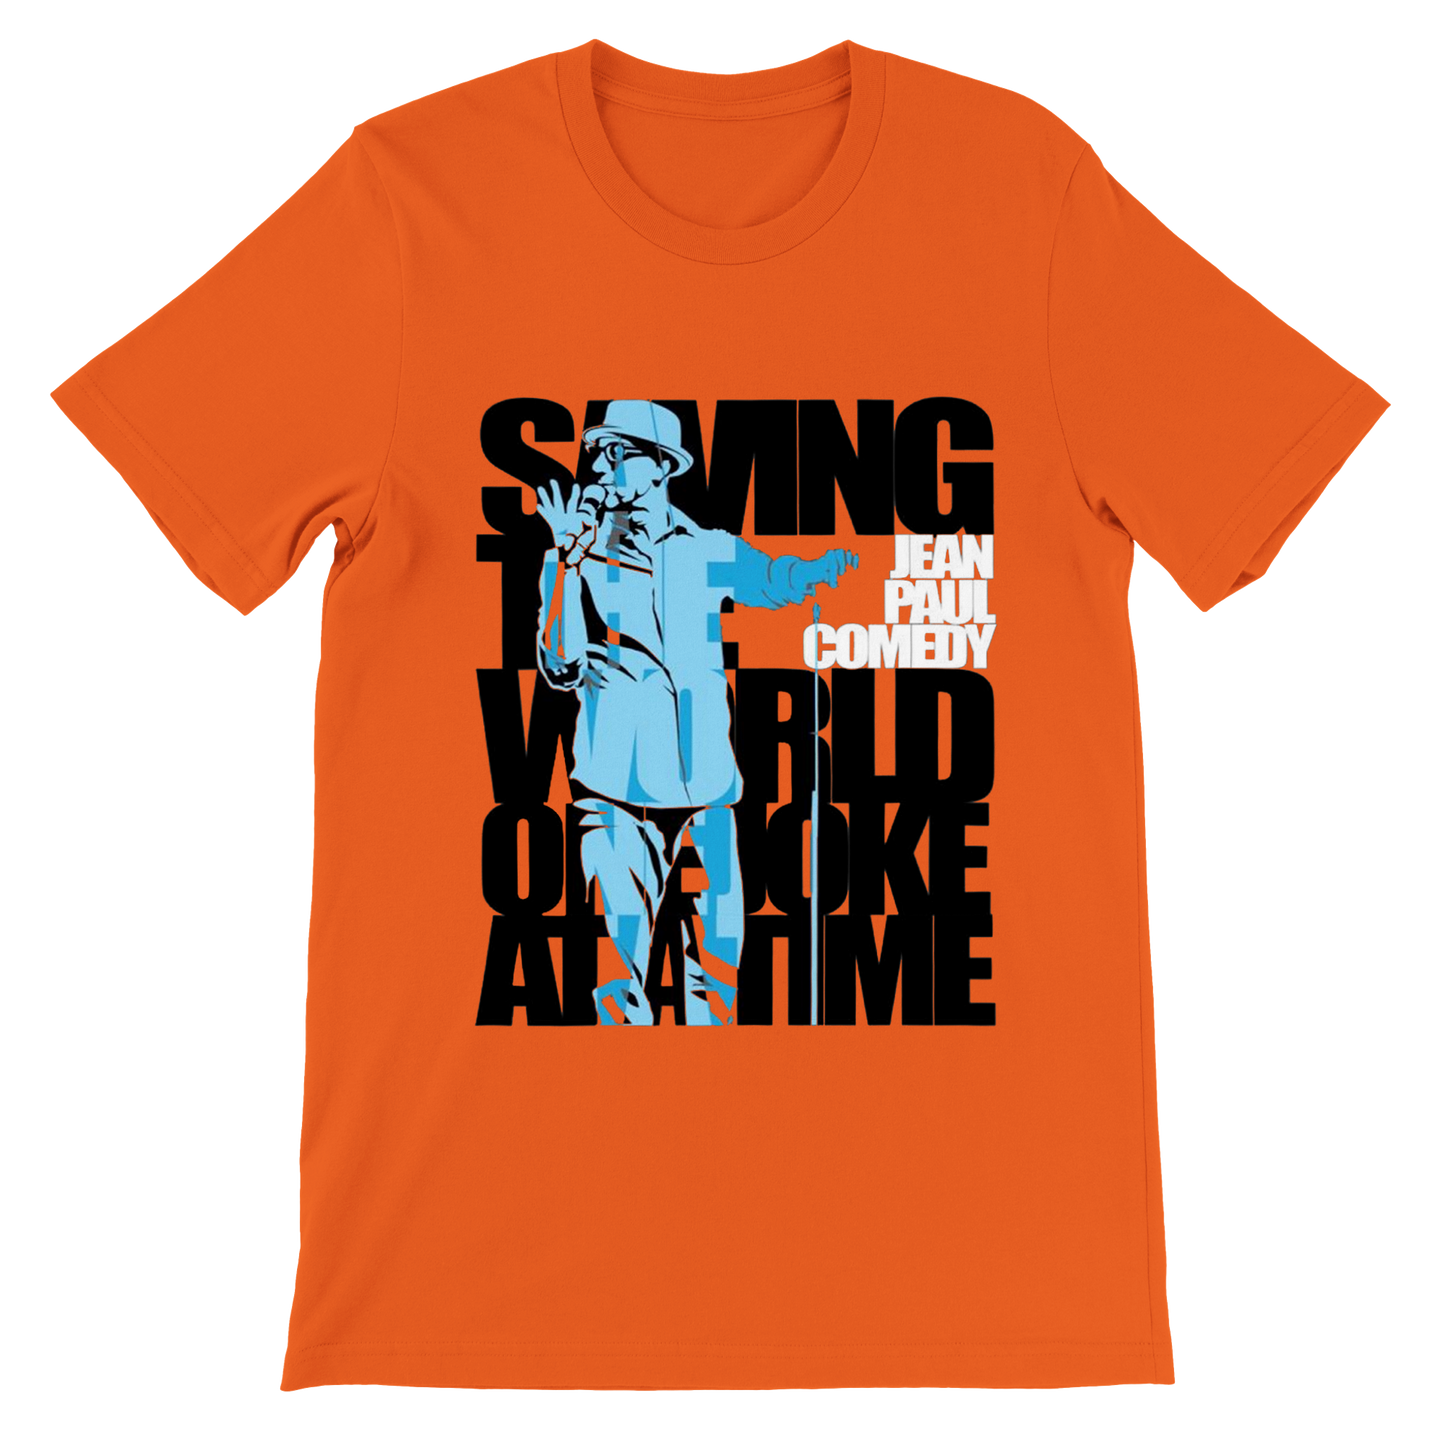 Jean Paul Comedy- Saving the world - Premium Unisex Crewneck T-shirt